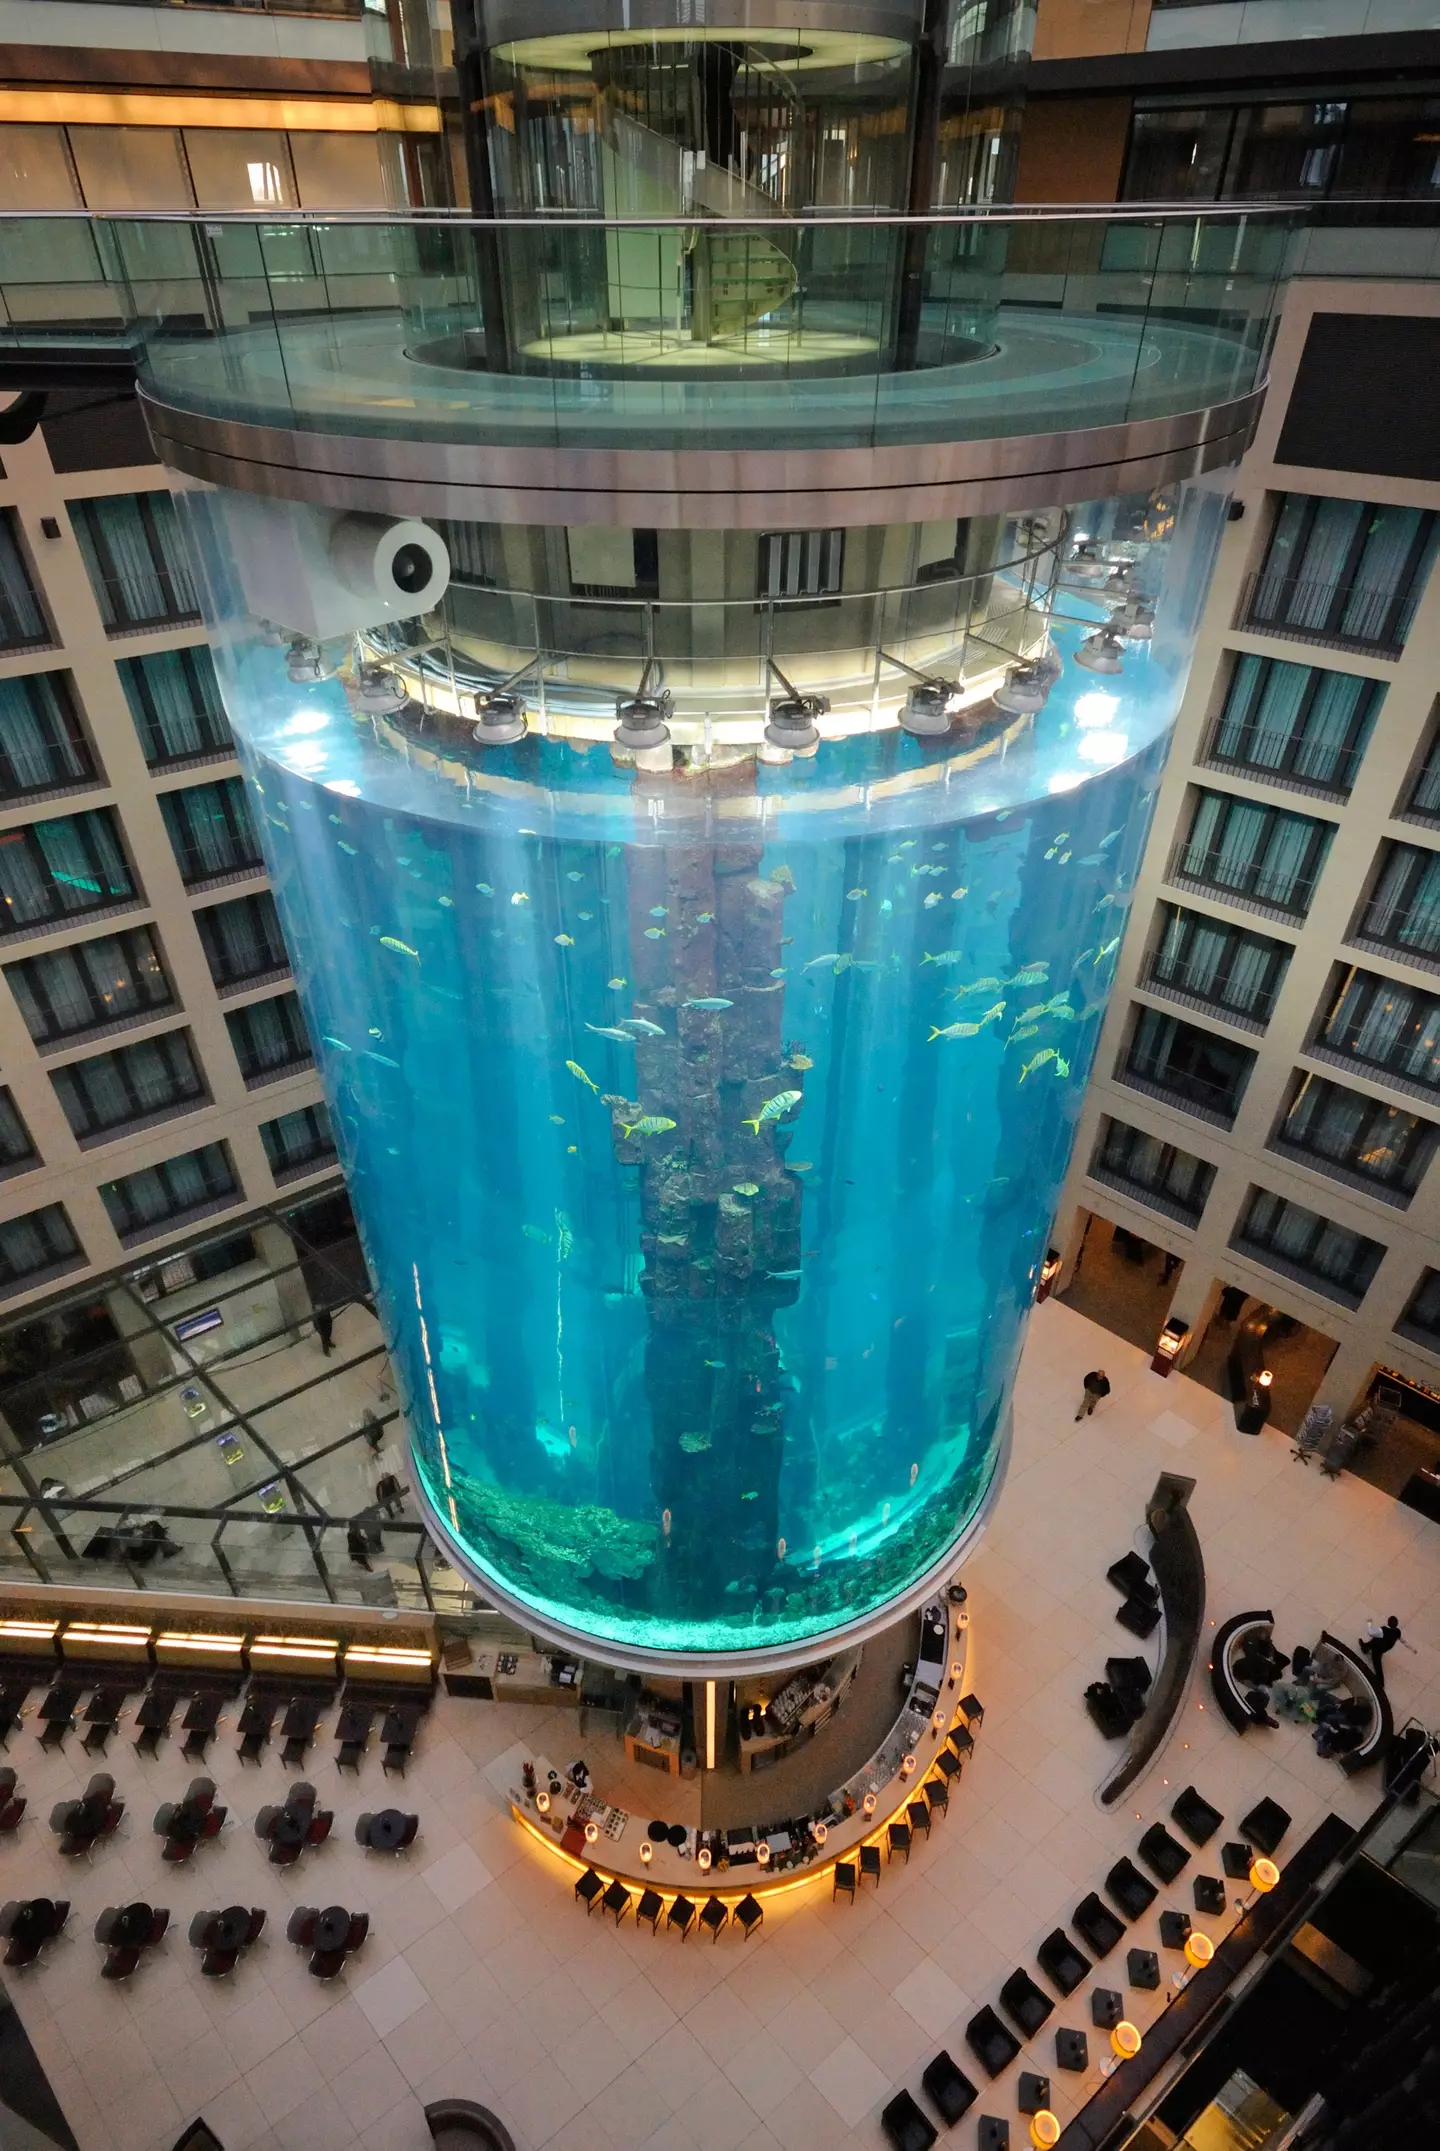 The aquarium is known as the AquaDom.